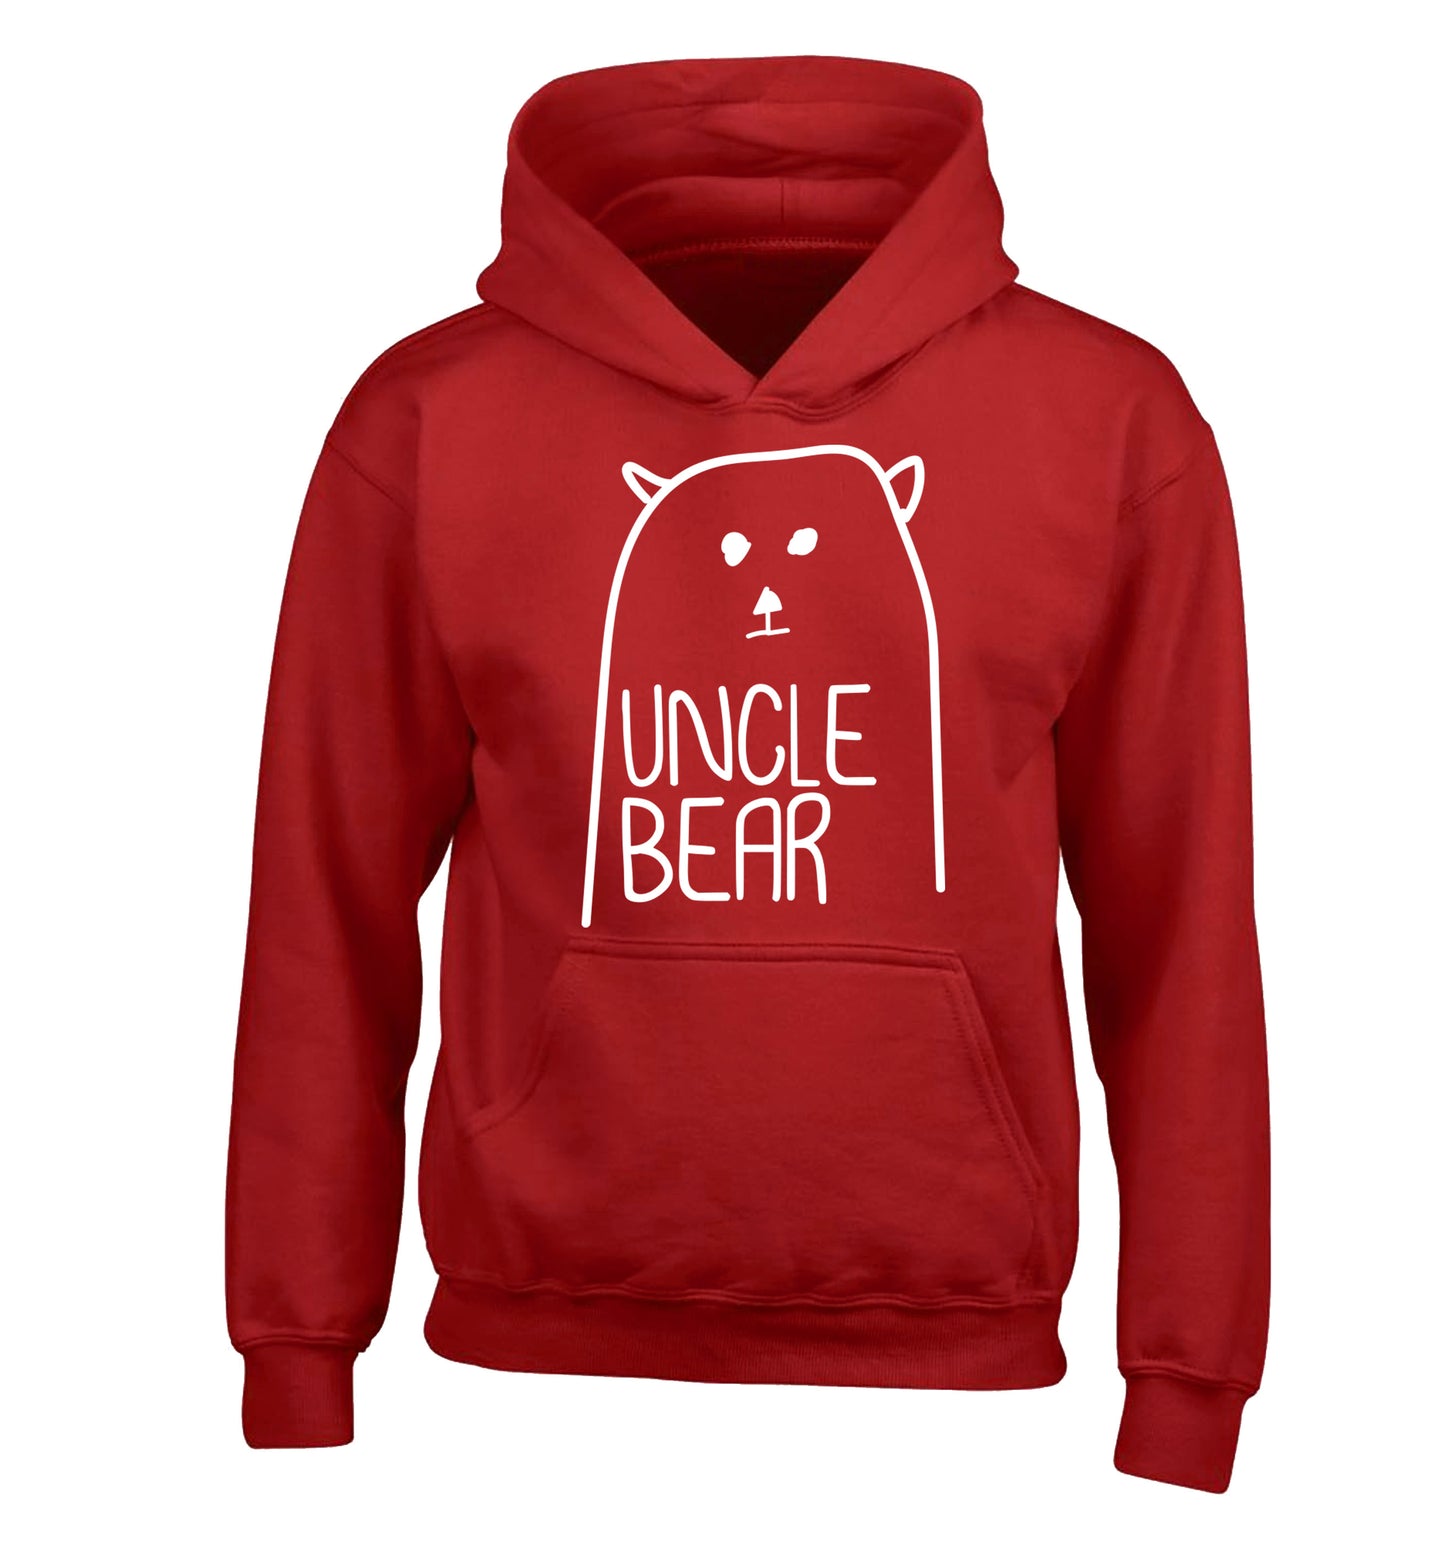 Uncle bear children's red hoodie 12-13 Years